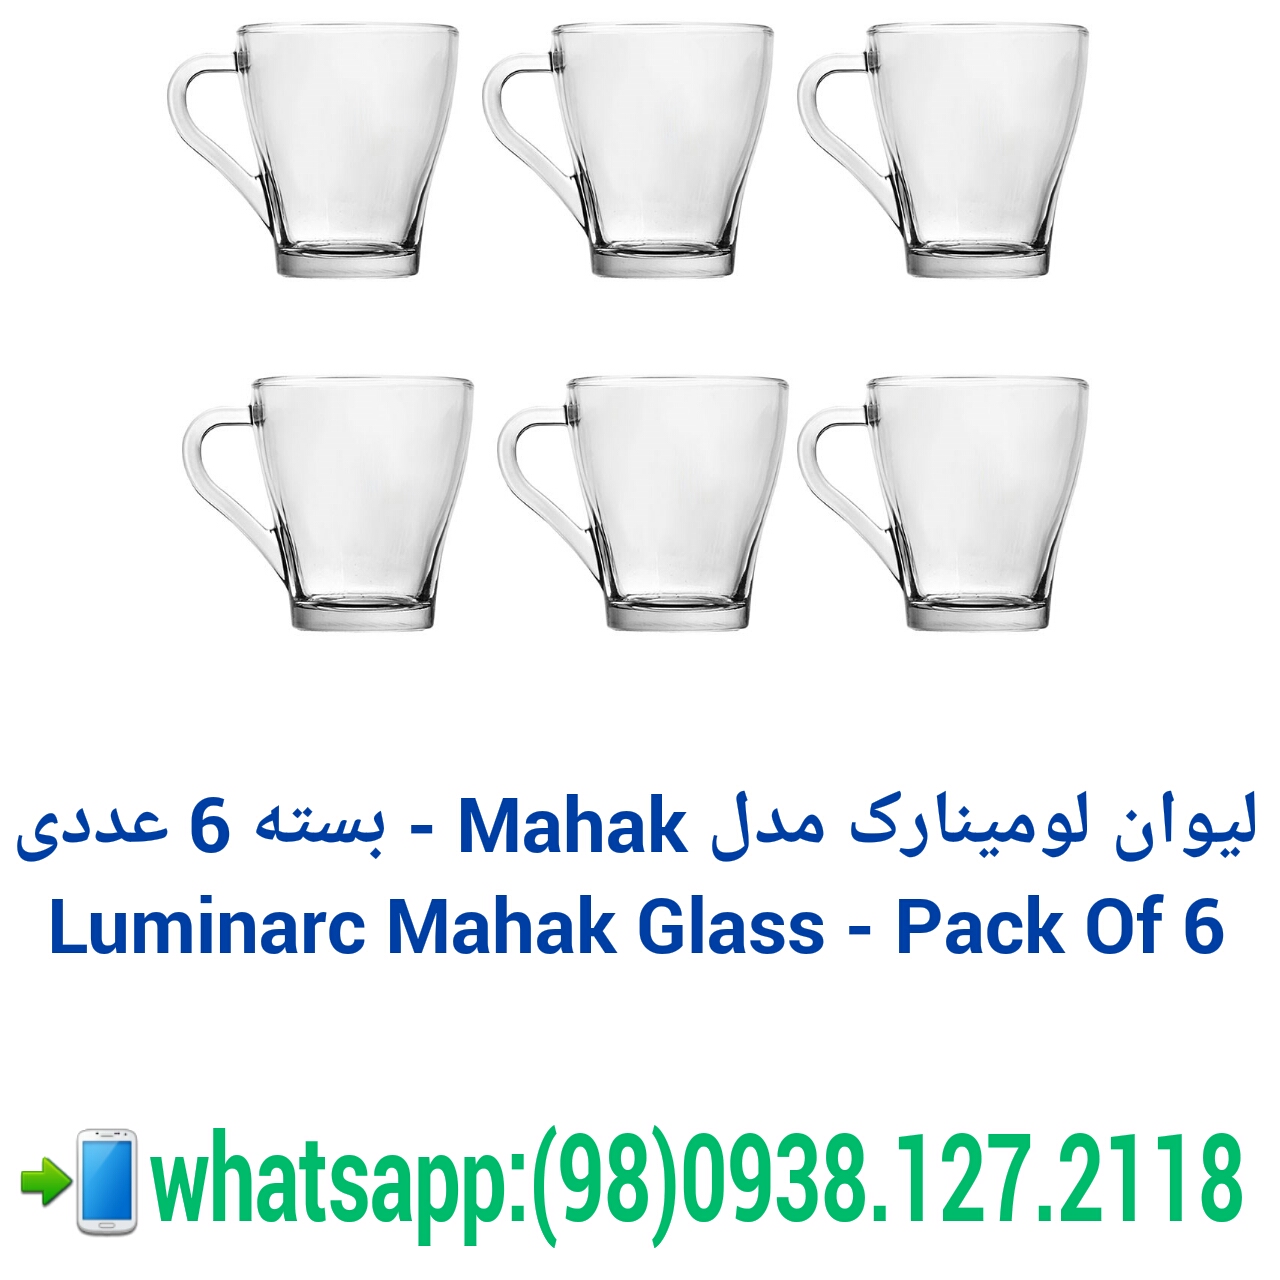 buy french luminarc glassware, luminarc,party glassware, پخش ليوان لومينارك,    ليوان لومينارك مدل Mahak - بسته 6 عددي,  Luminarc Mahak Glass Pack Of 6        